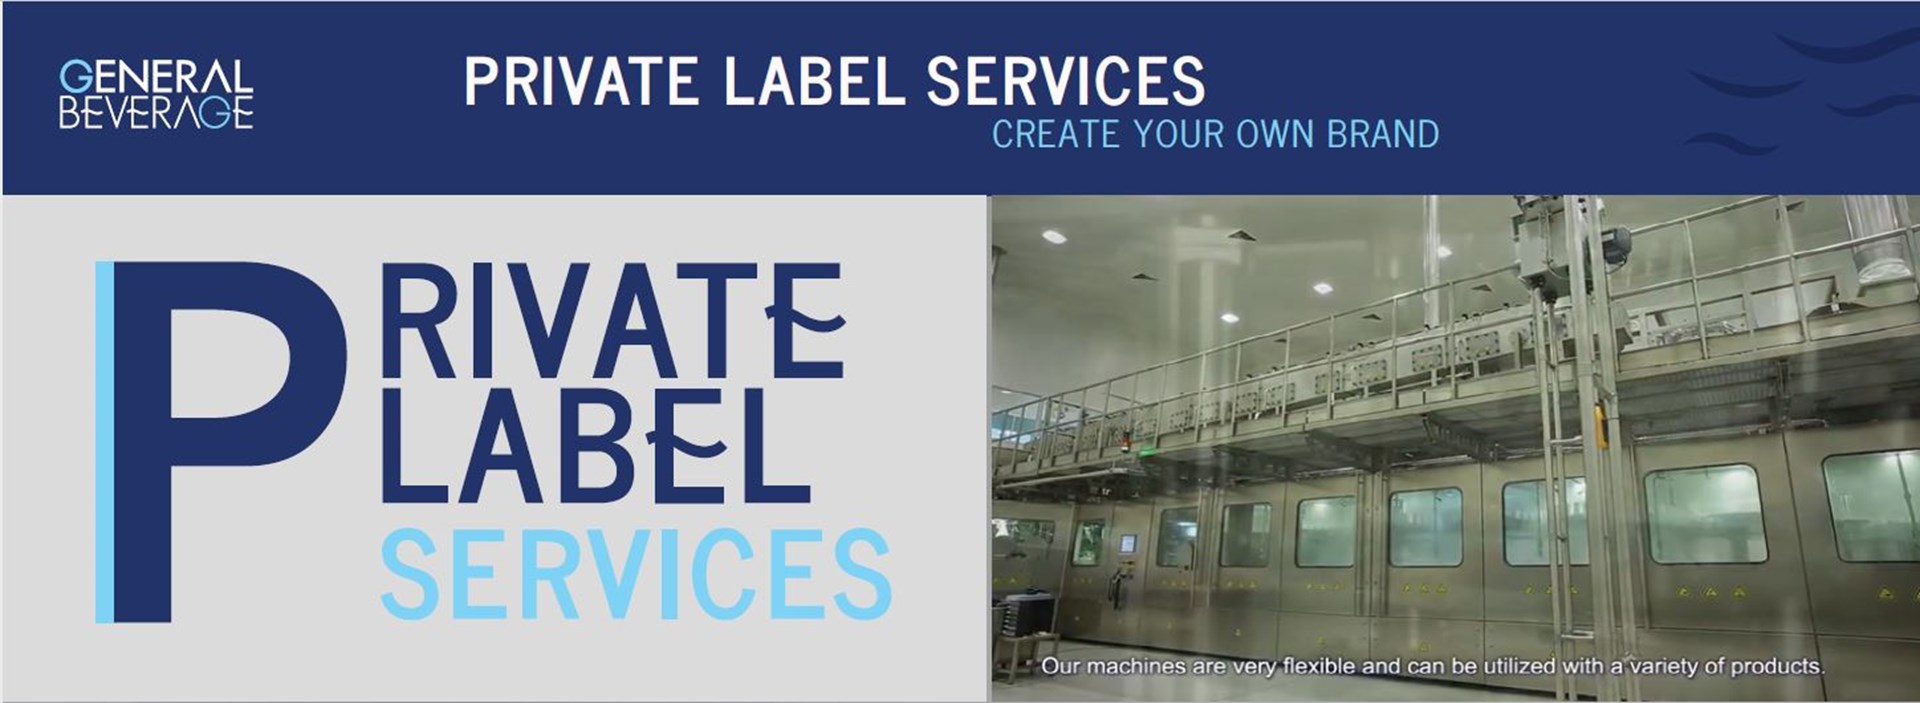 General Beverage - Private Label Service